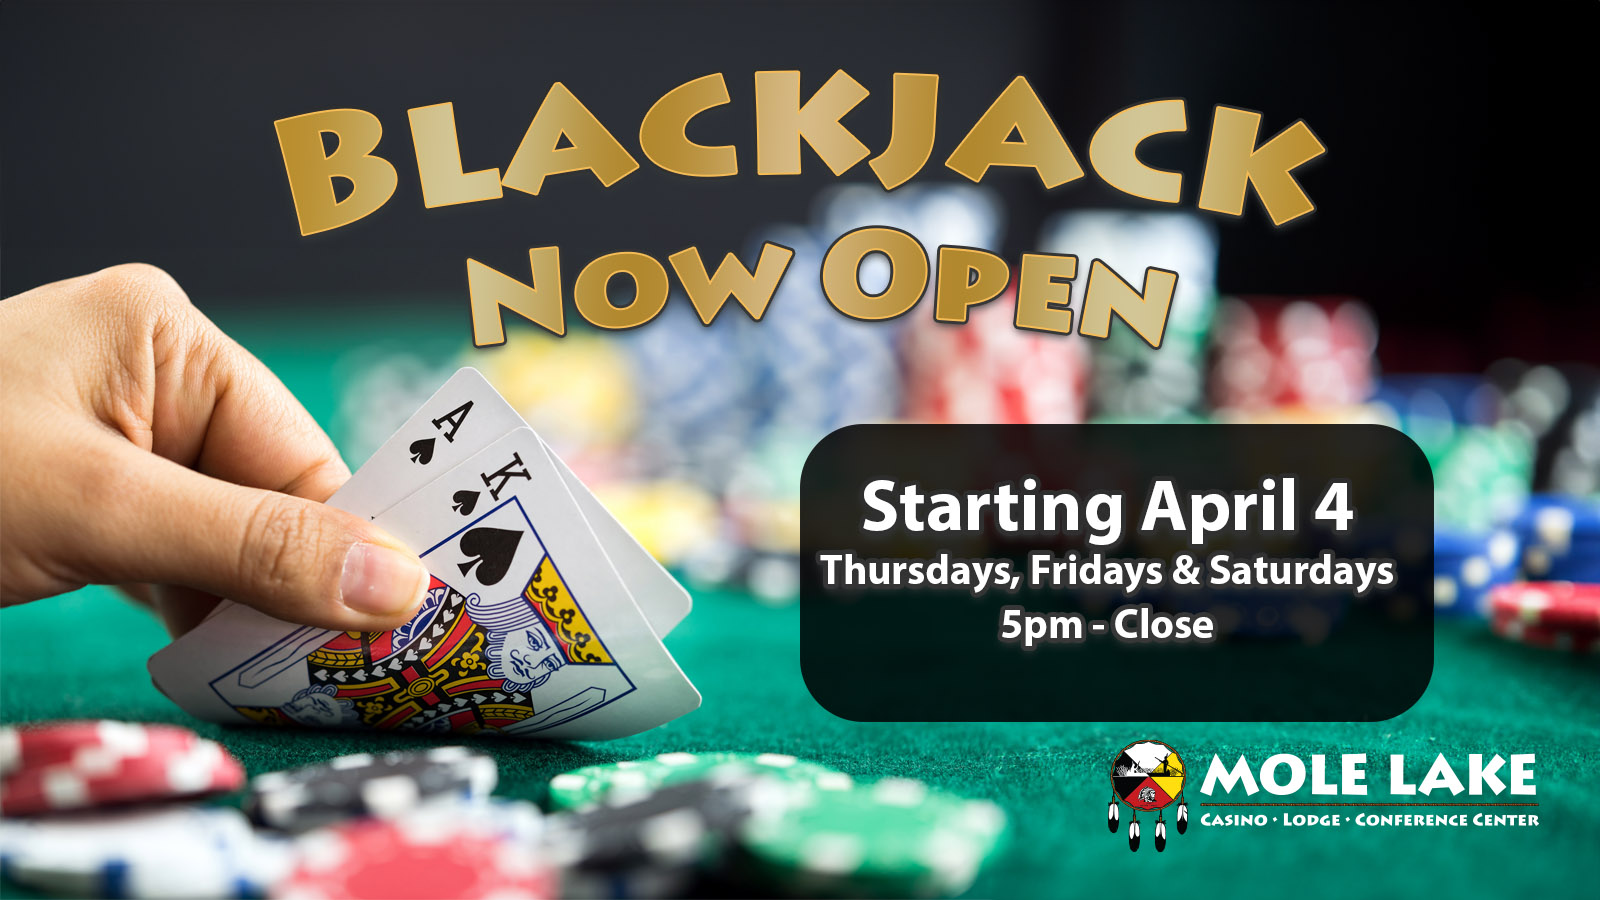 Blackjack is back at Mole Lake Casino Lodge In Crandon